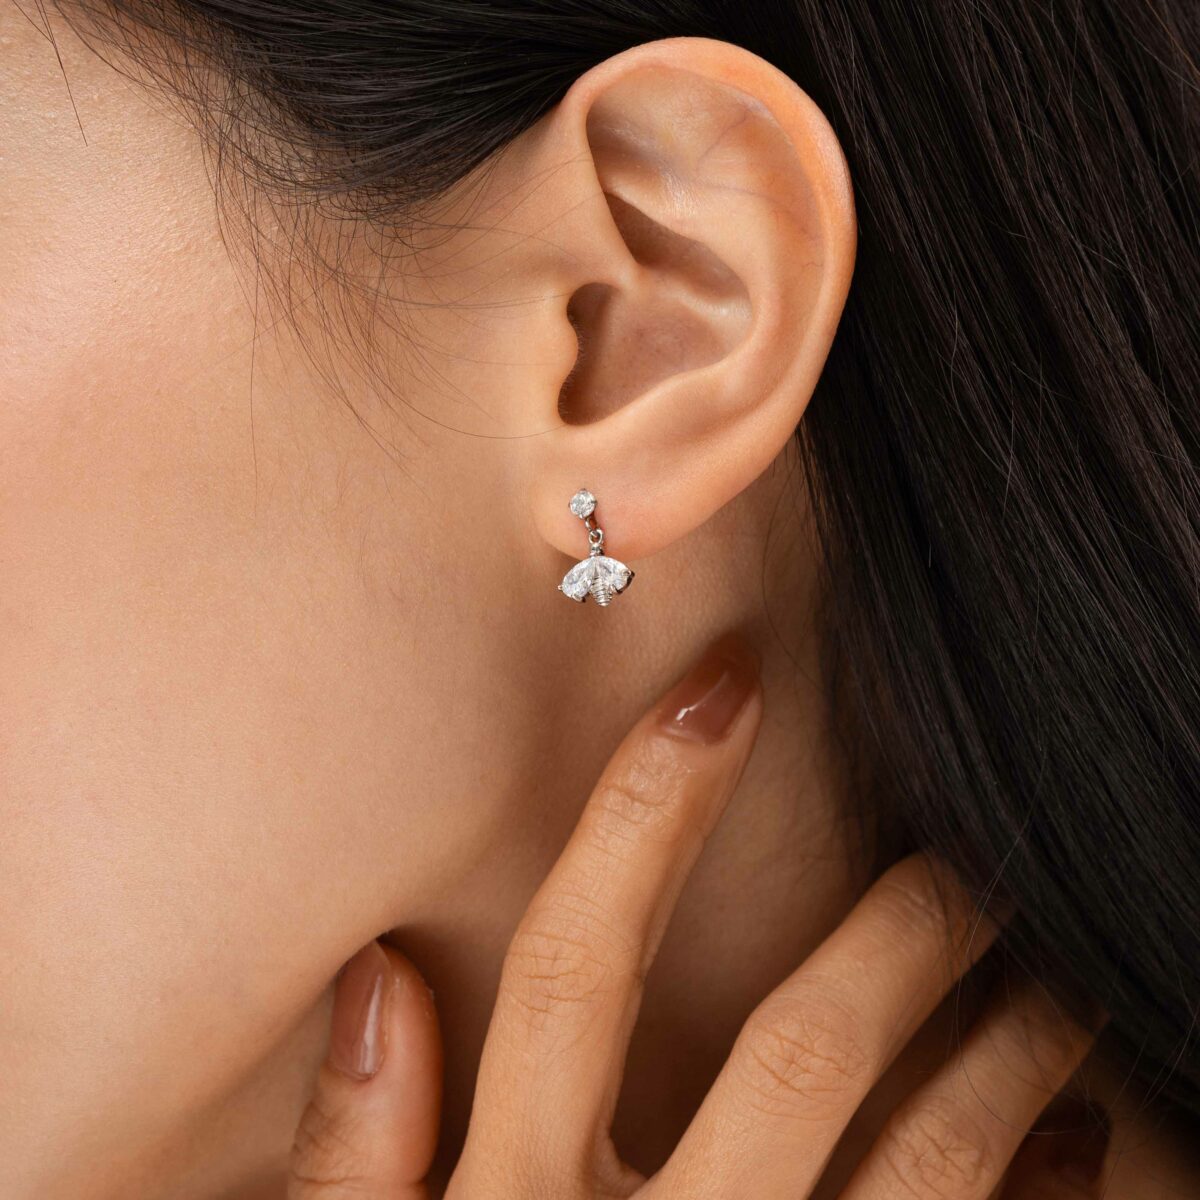 https://m.clubbella.co/product/buzz-earrings-24k-white-gold-plated/ BUZZ SILVER EARRINGS (3)